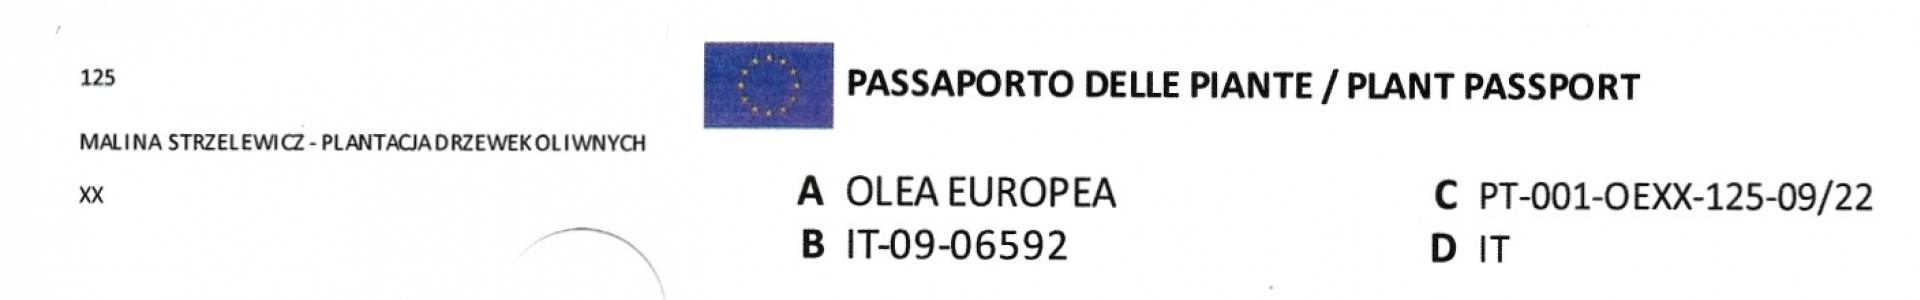 paszport fitosanitarny drzewka oliwnego